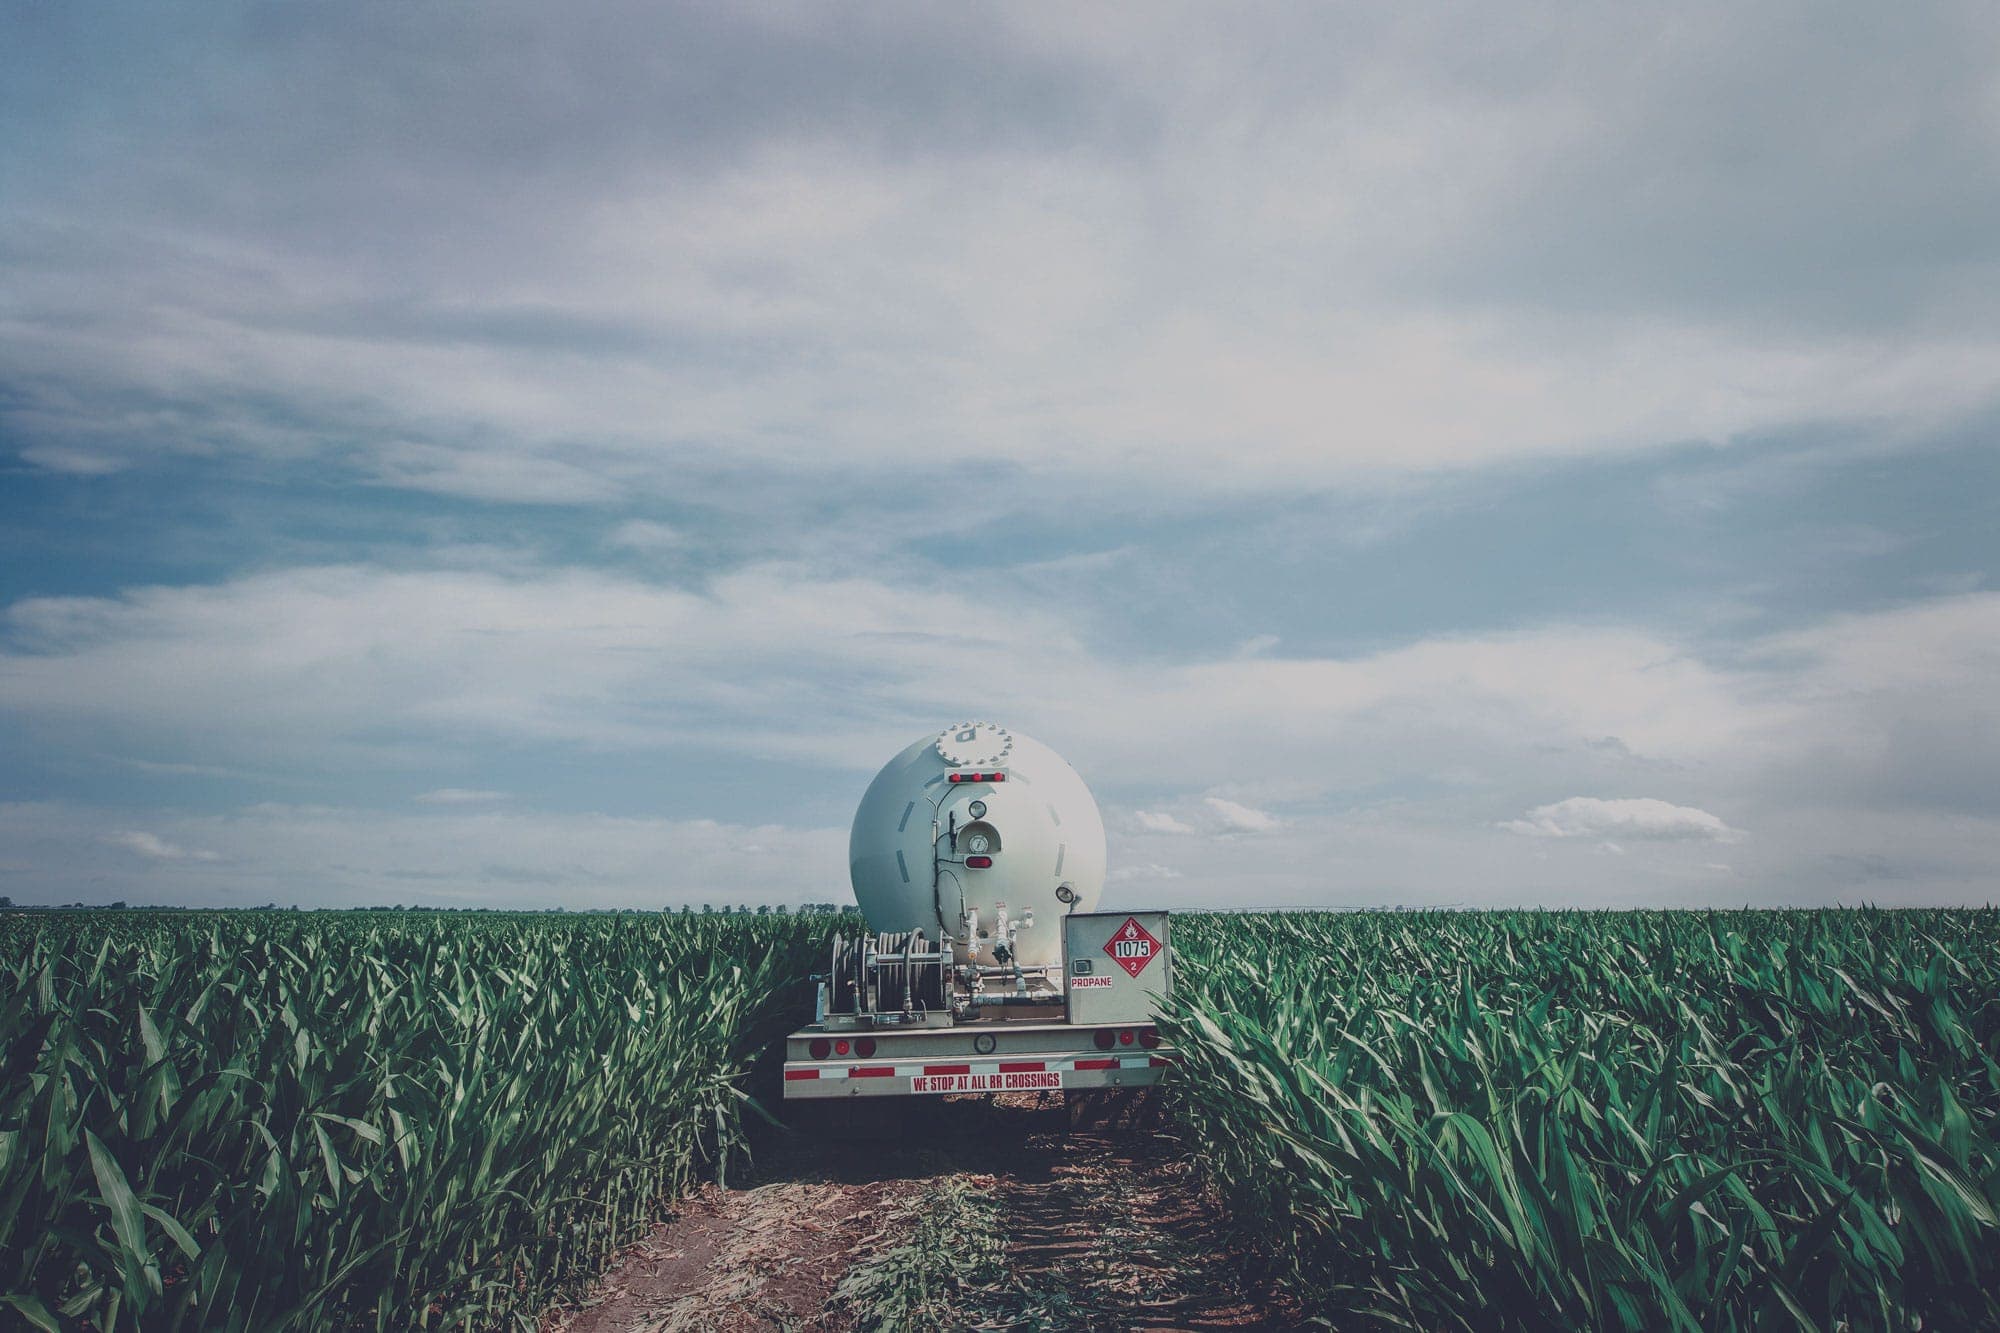 A propane truck driving through a corn field.